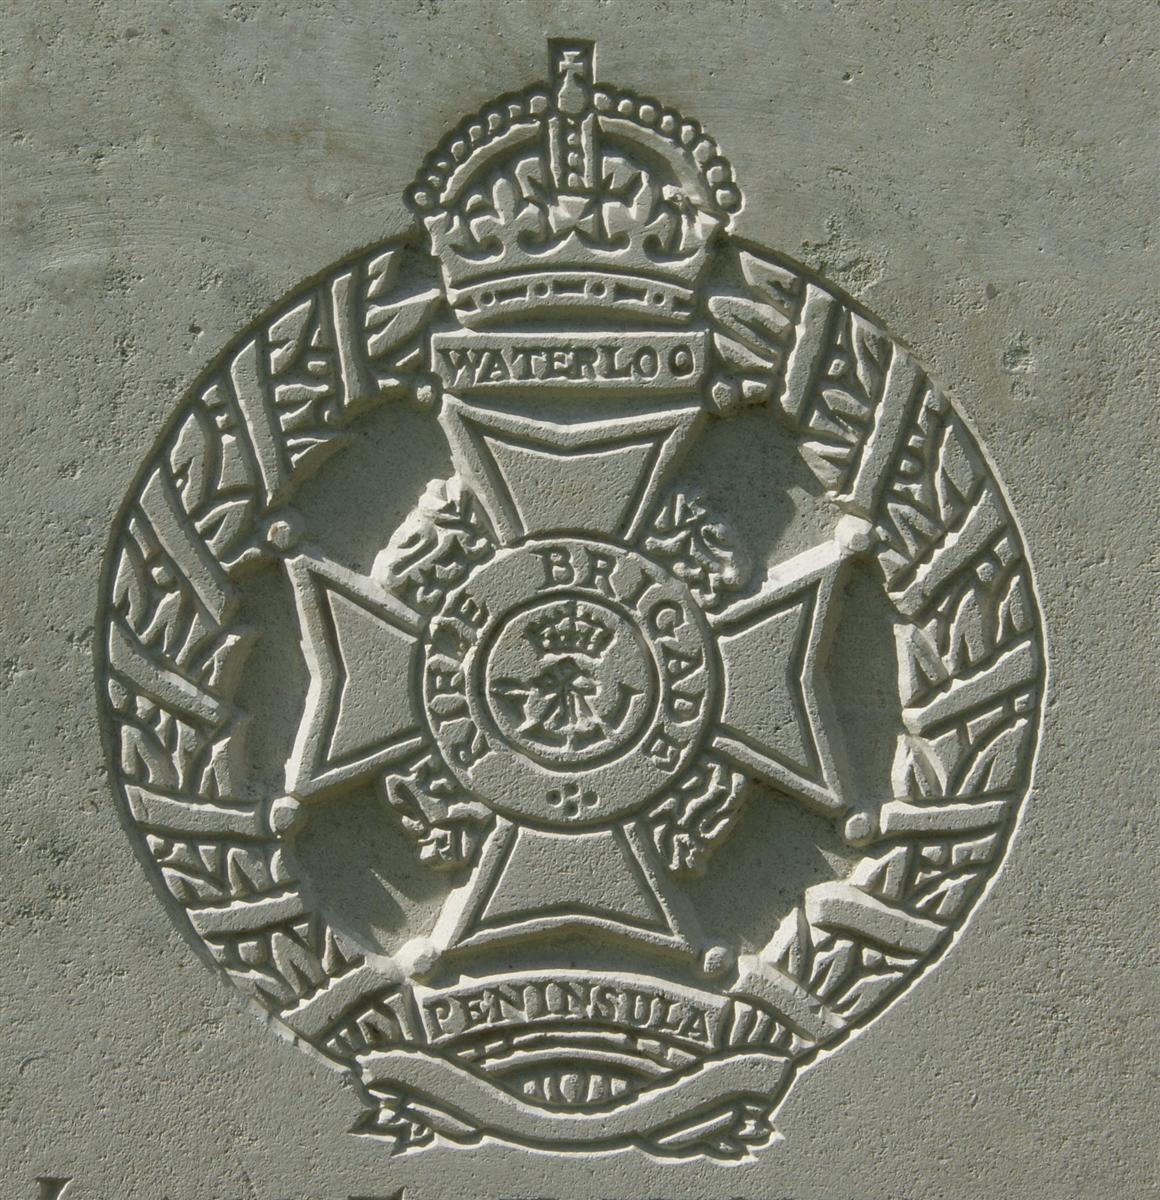 ASC badge